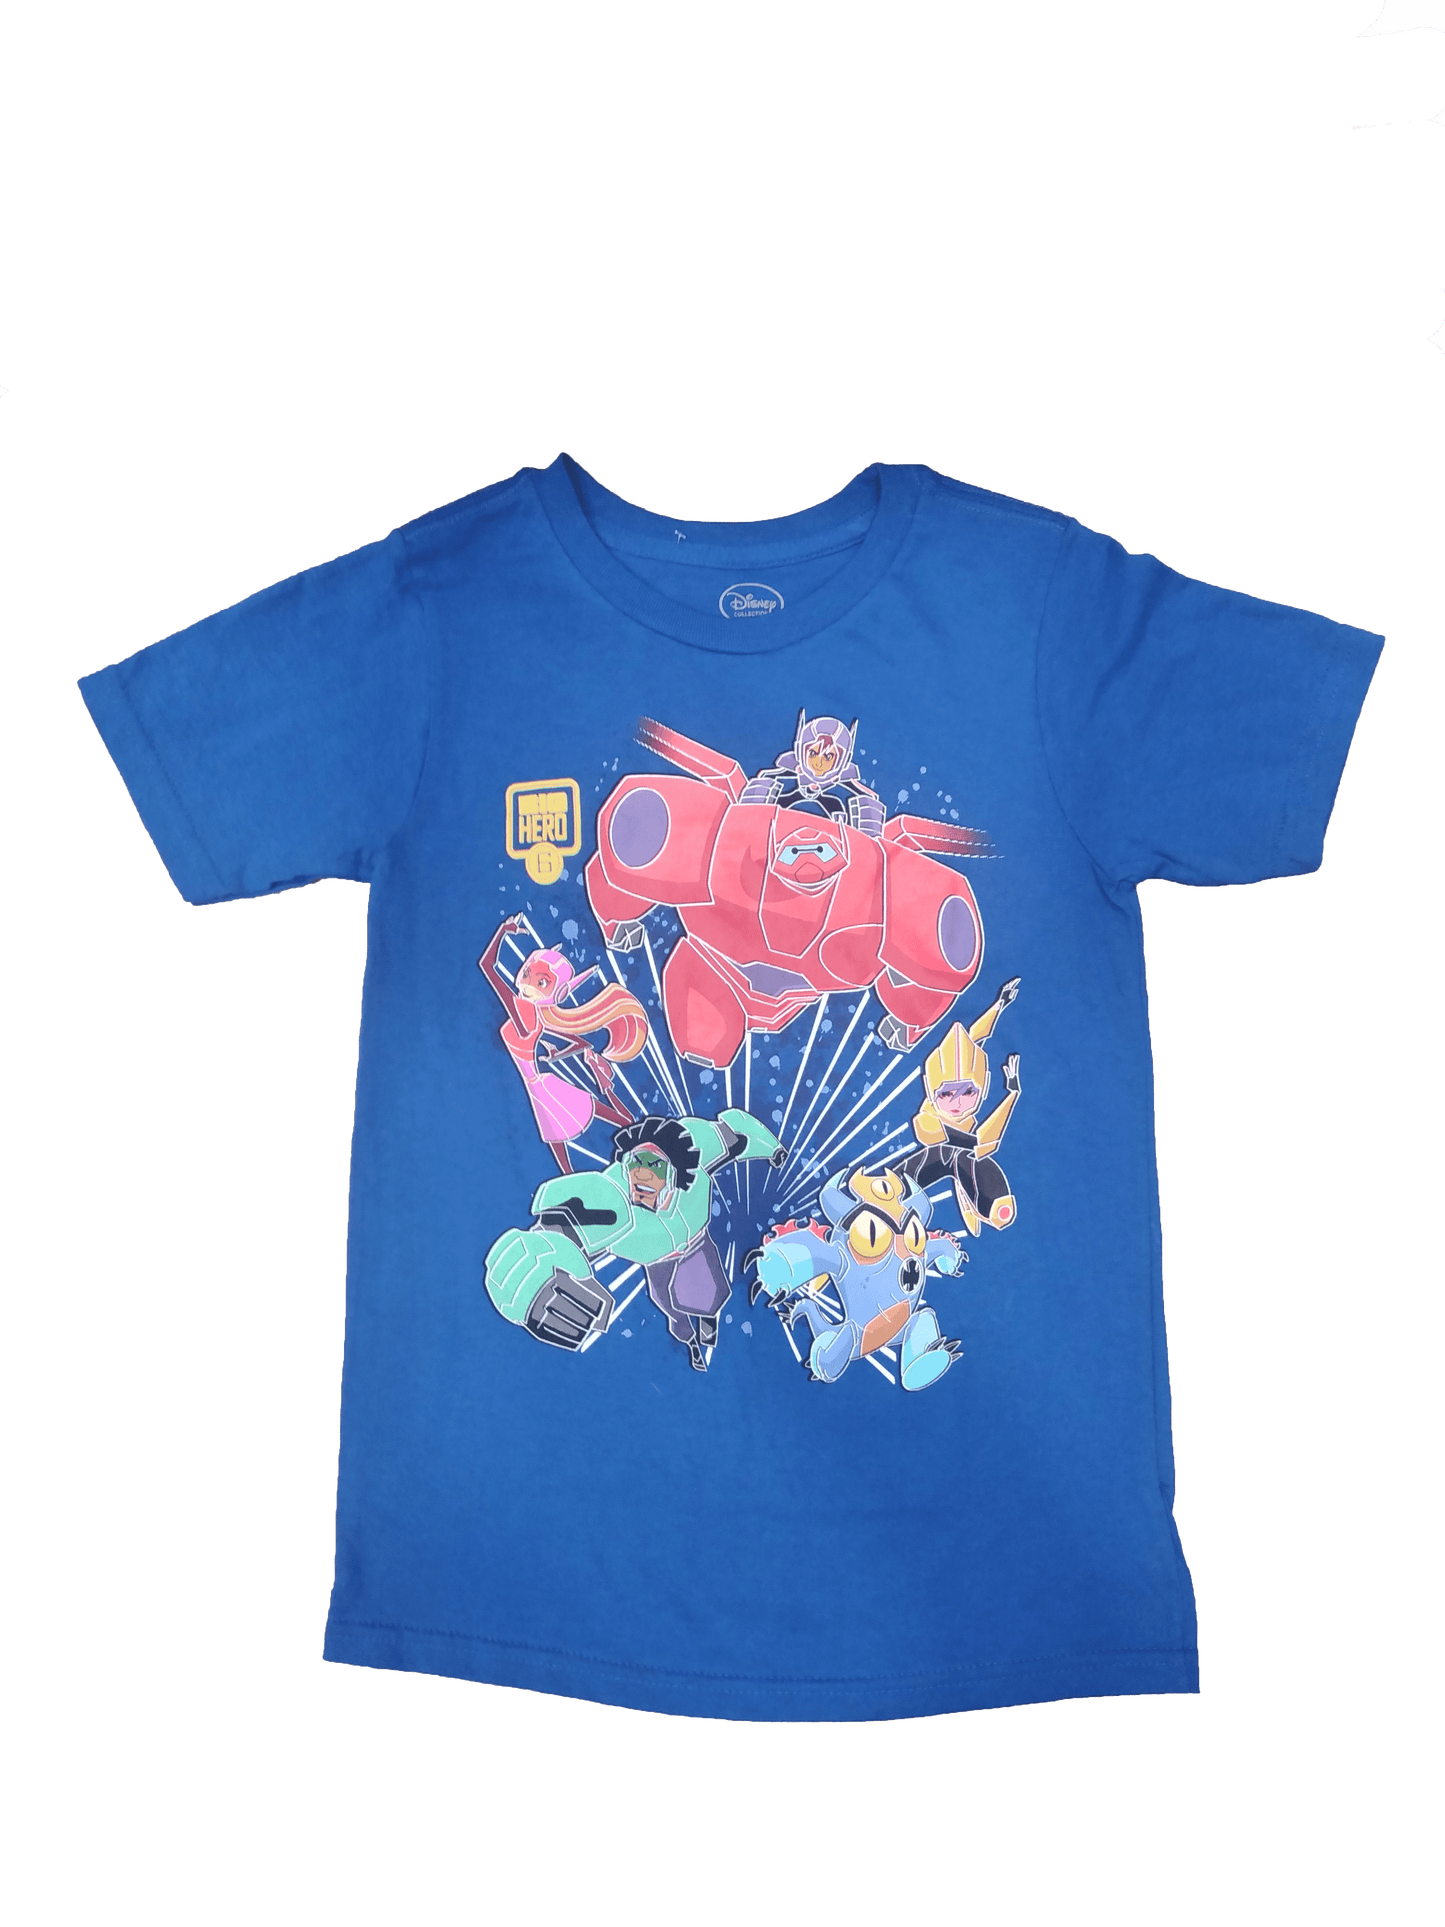 Disney Apparel 5-6 Years Kids - Graphic T-Shirt